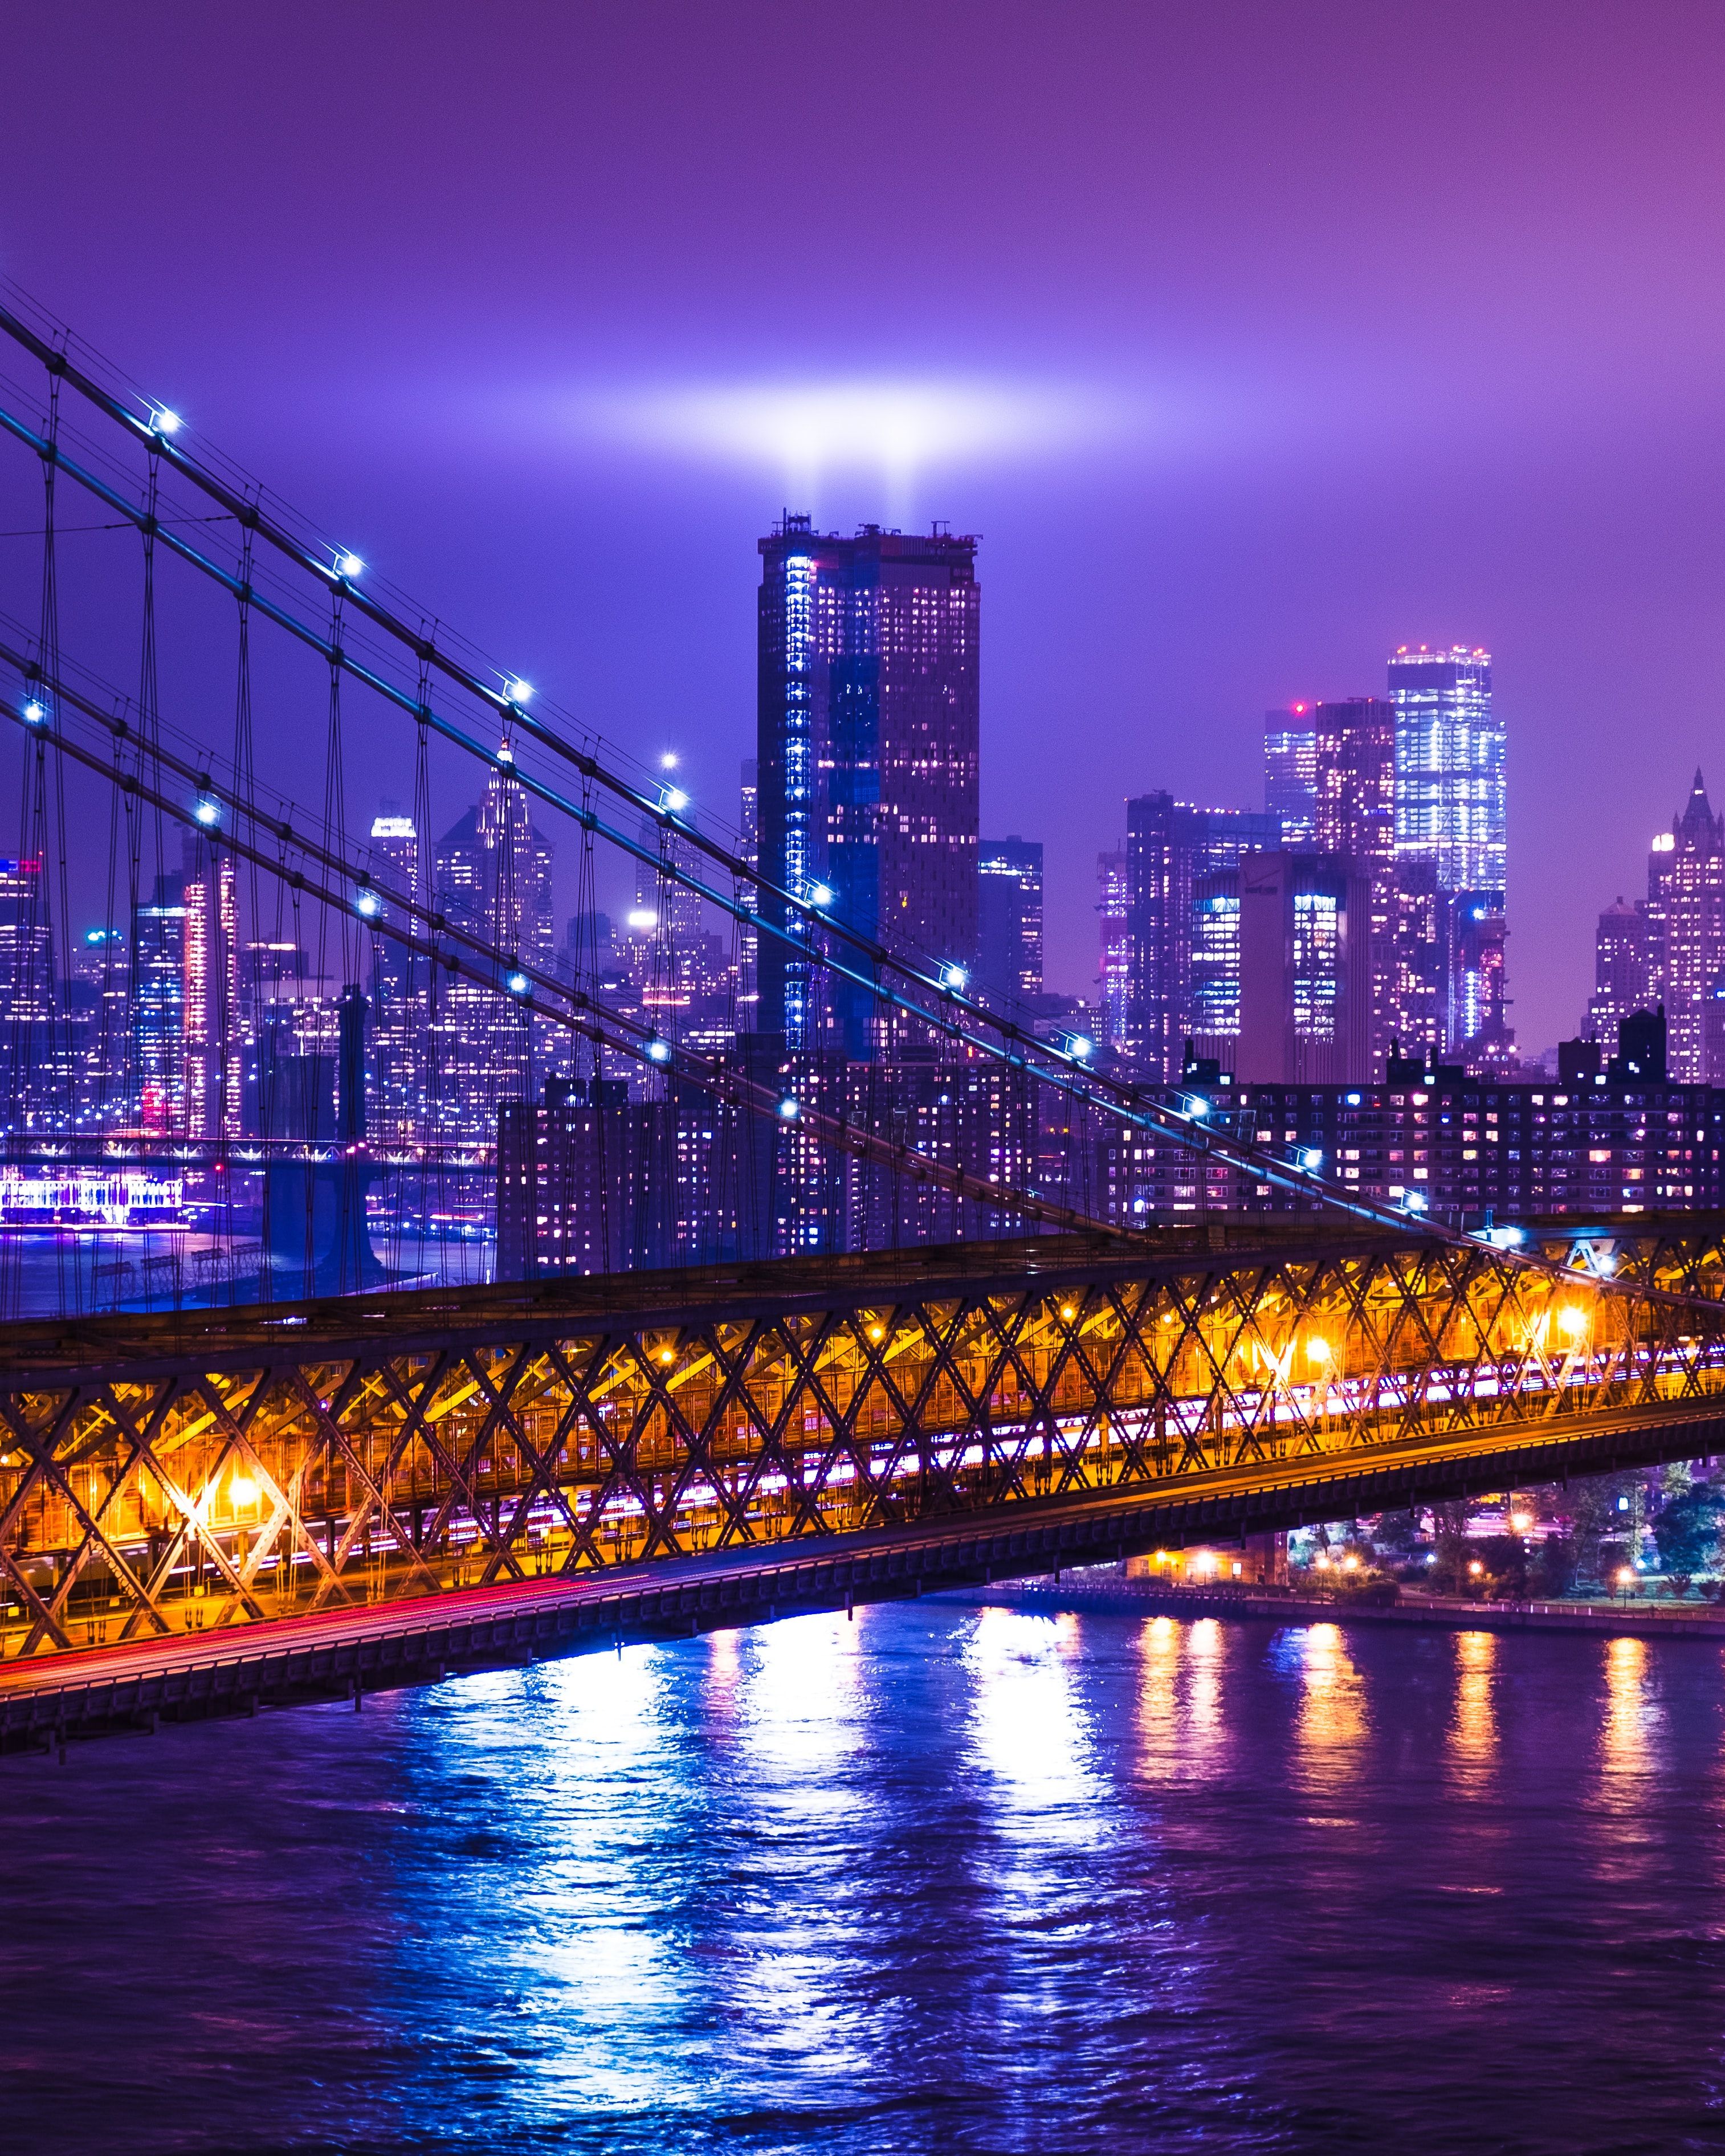 New York City 4K Wallpaper, Night, Cityscape, Purple, City lights, Suspension bridge, Buildings, USA, World